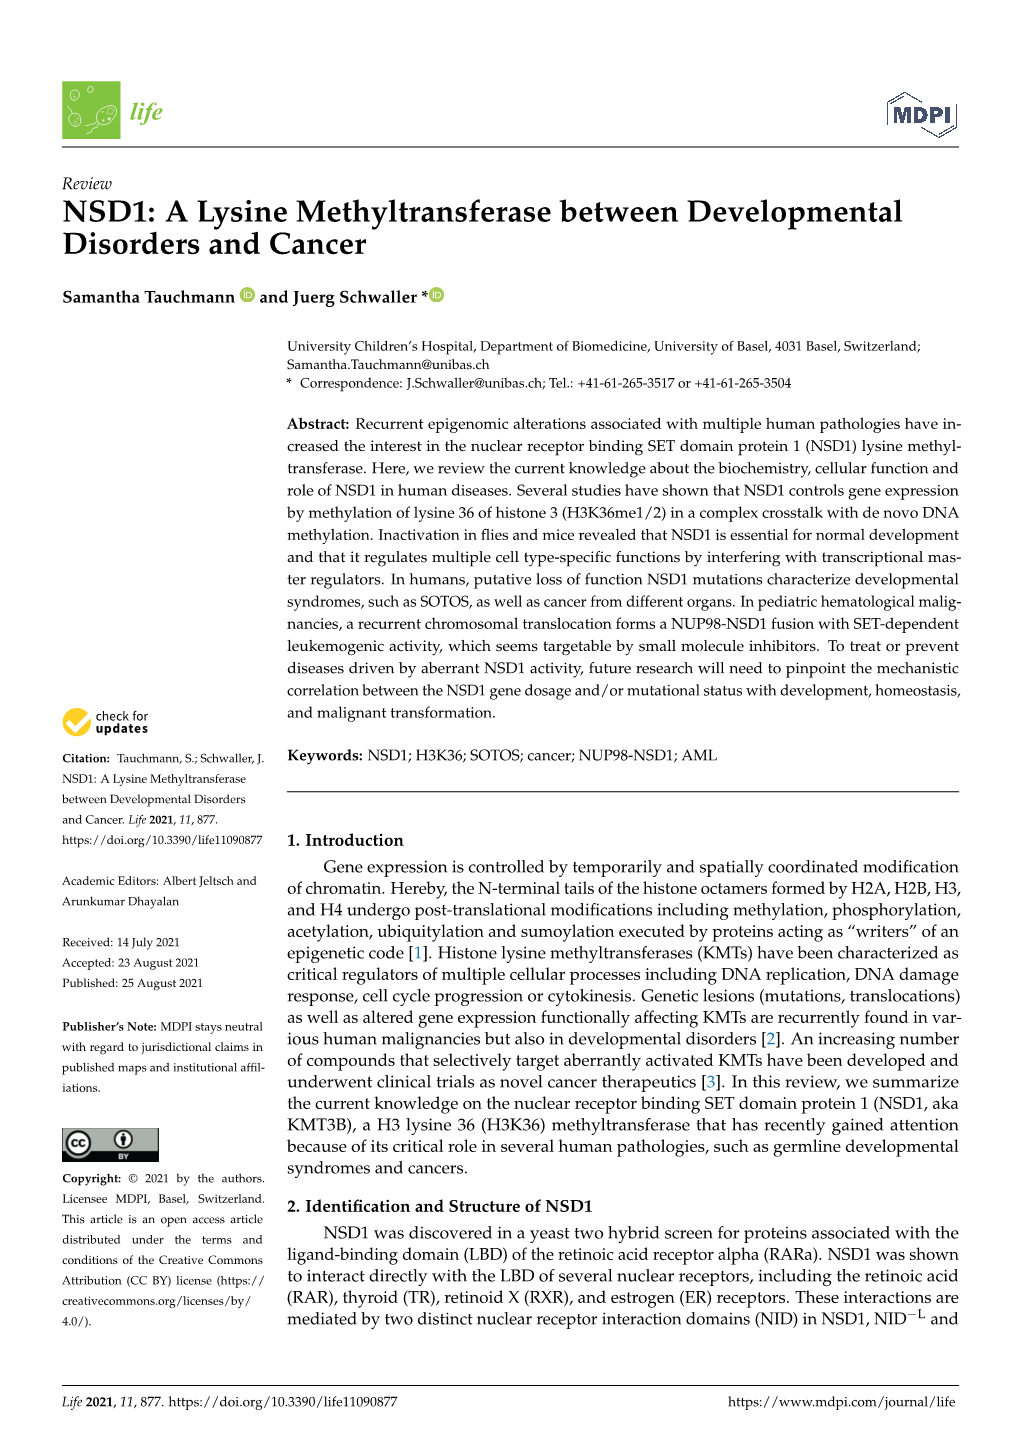 NSD1: a Lysine Methyltransferase Between Developmental Disorders and Cancer